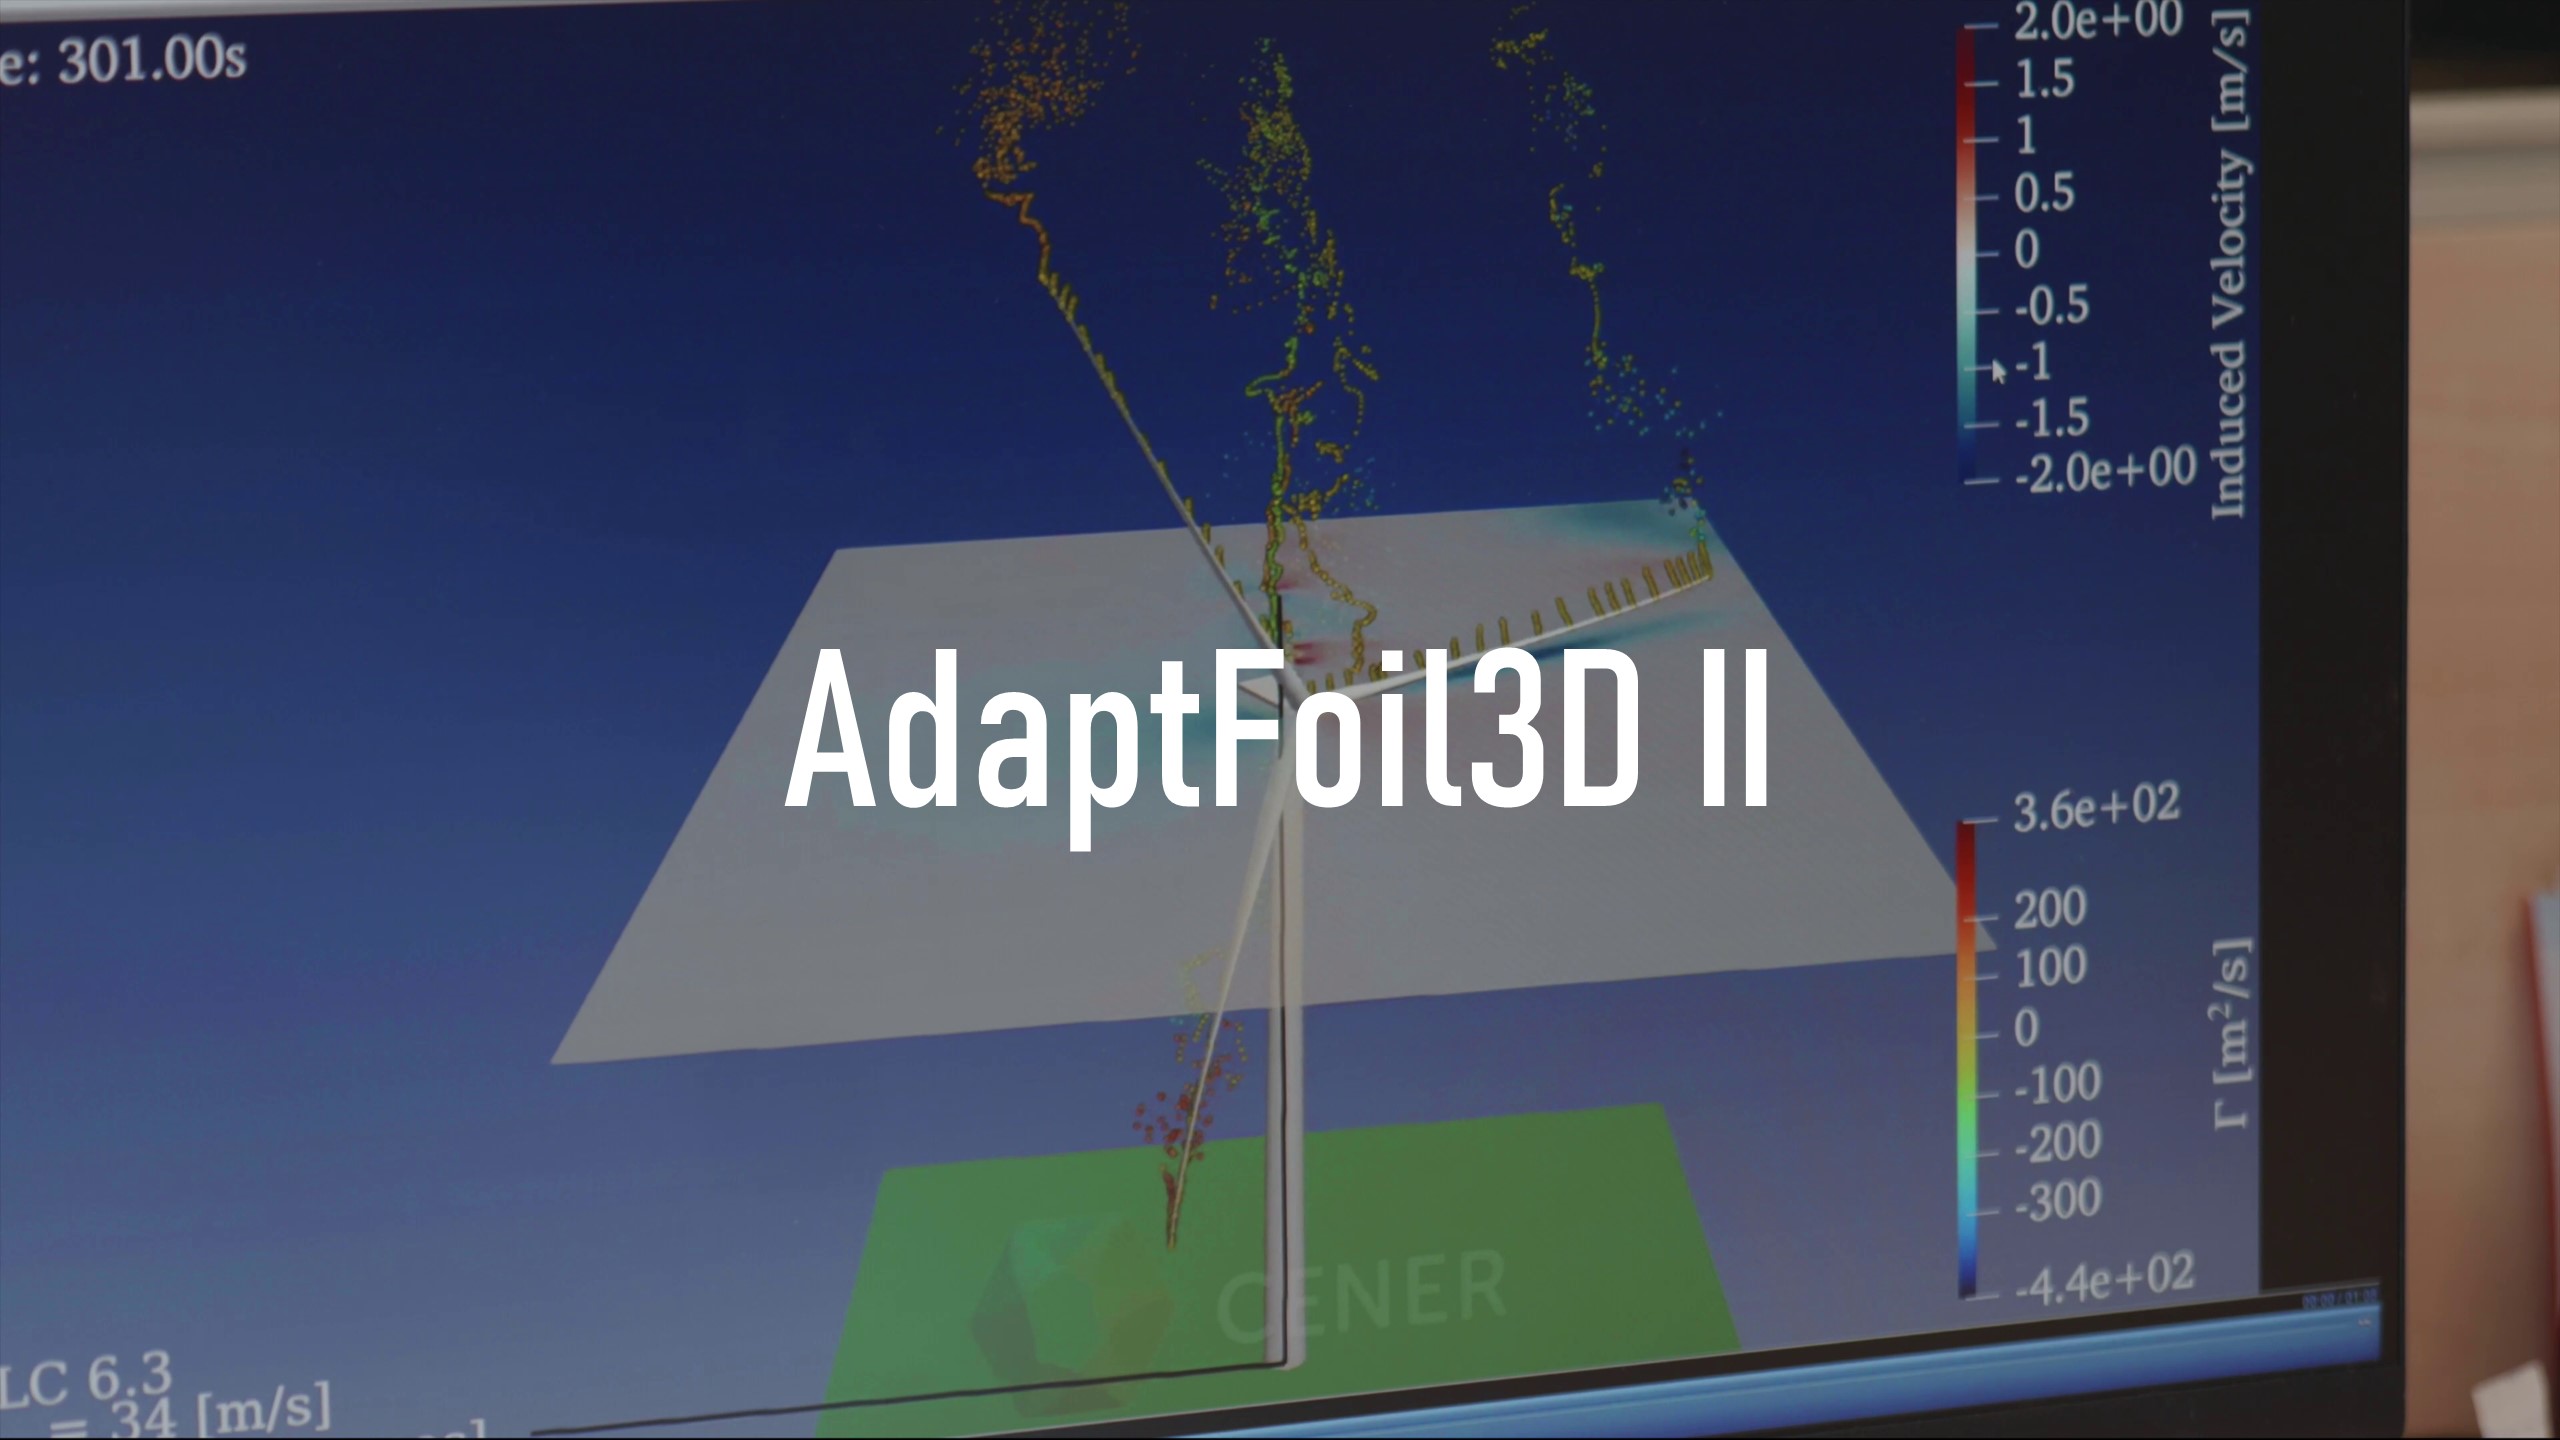 AdaptFoil3D II